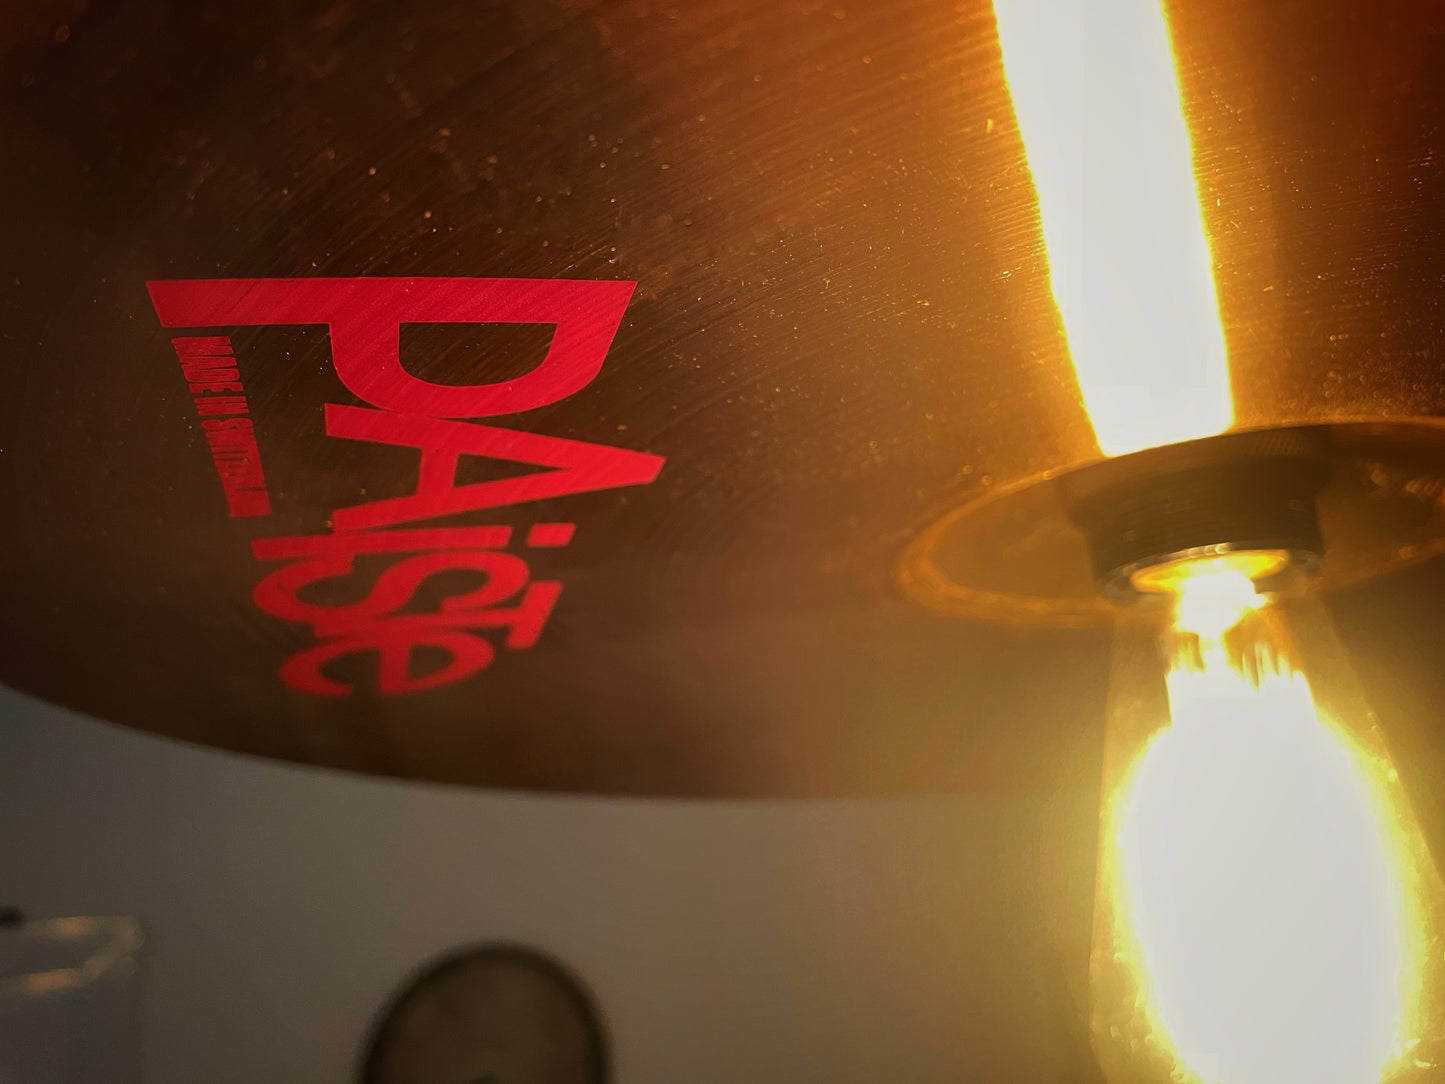 Paiste Cymbal Light Fitting / Hanging Light Pendant / Upcycle / Drum Cymbal Lighting